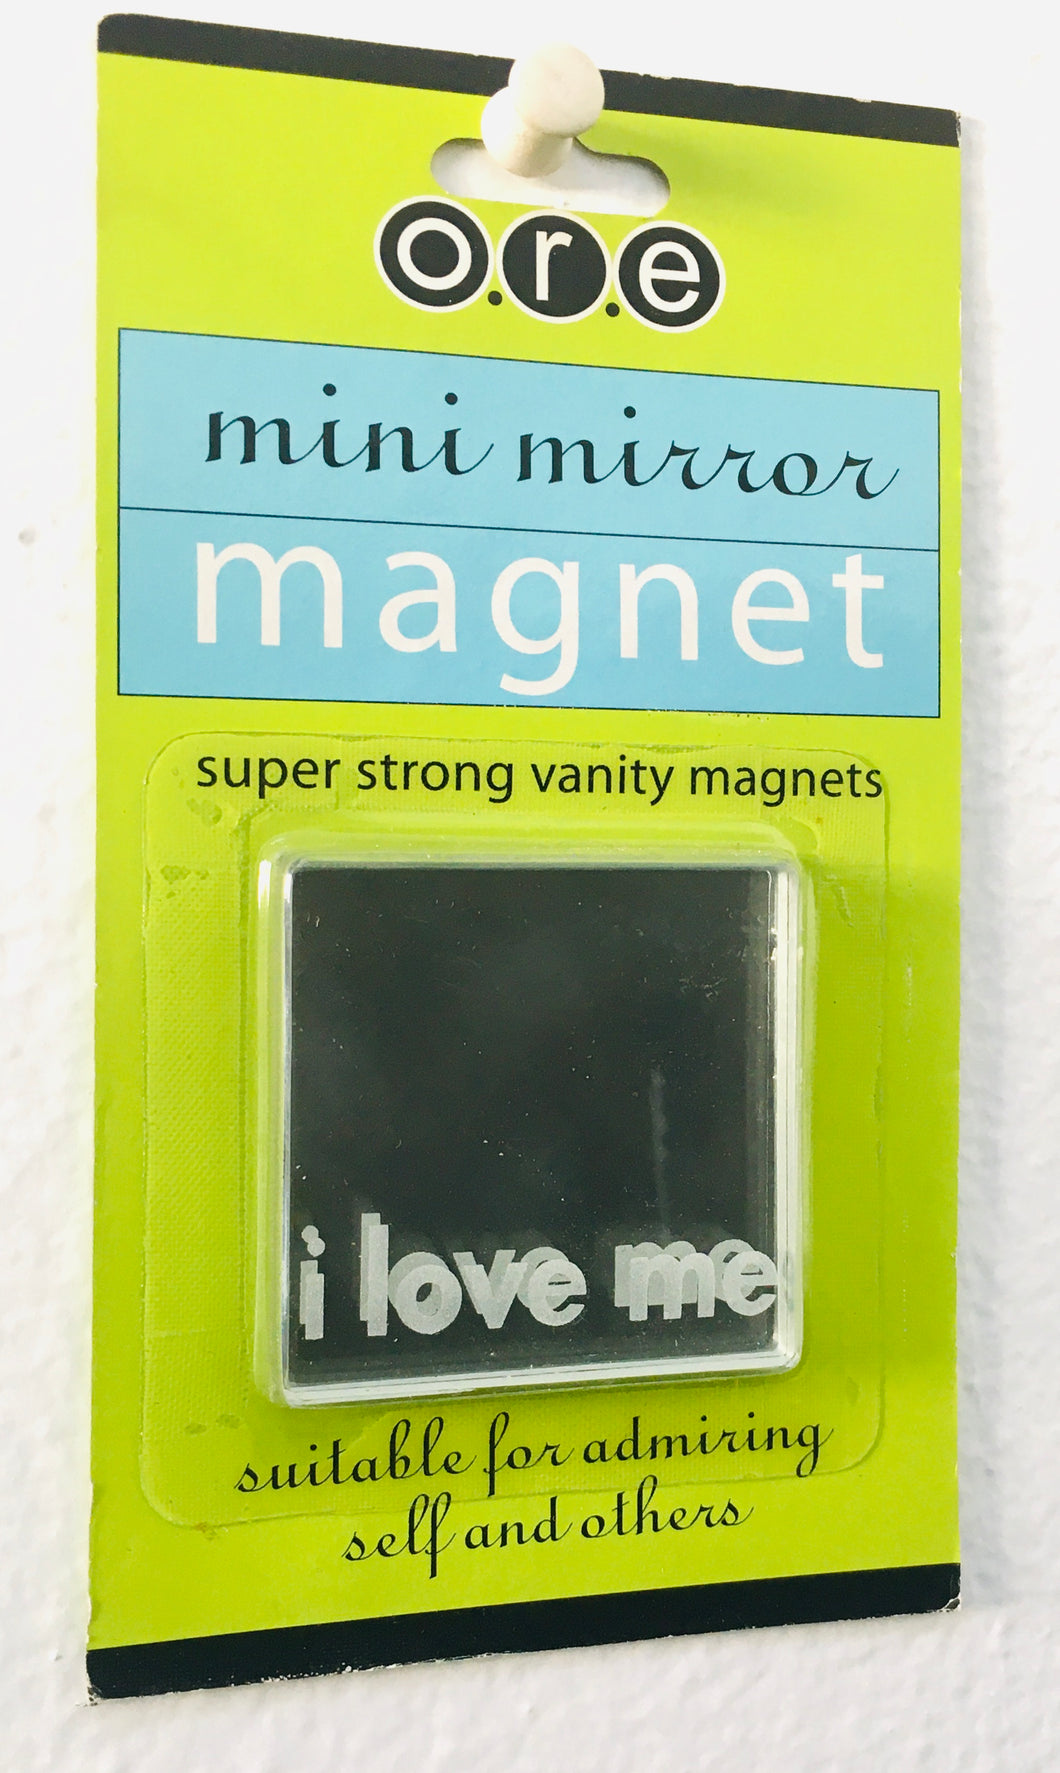 I LOVE ME: refrigerator magnet mirror